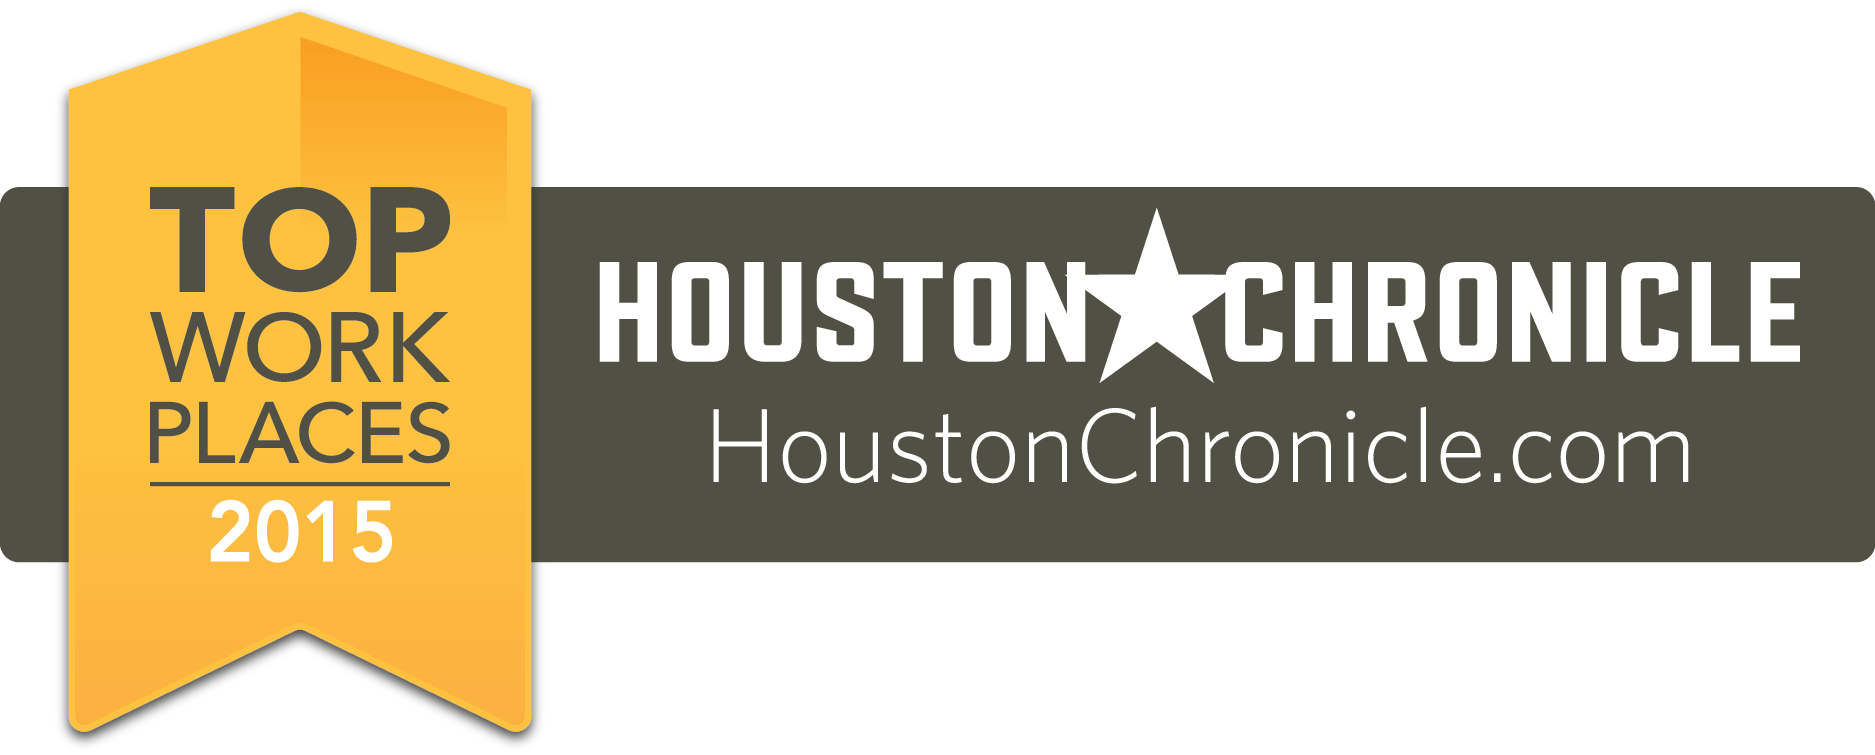 Houston Chronicle Top Workplaces 2015 logo